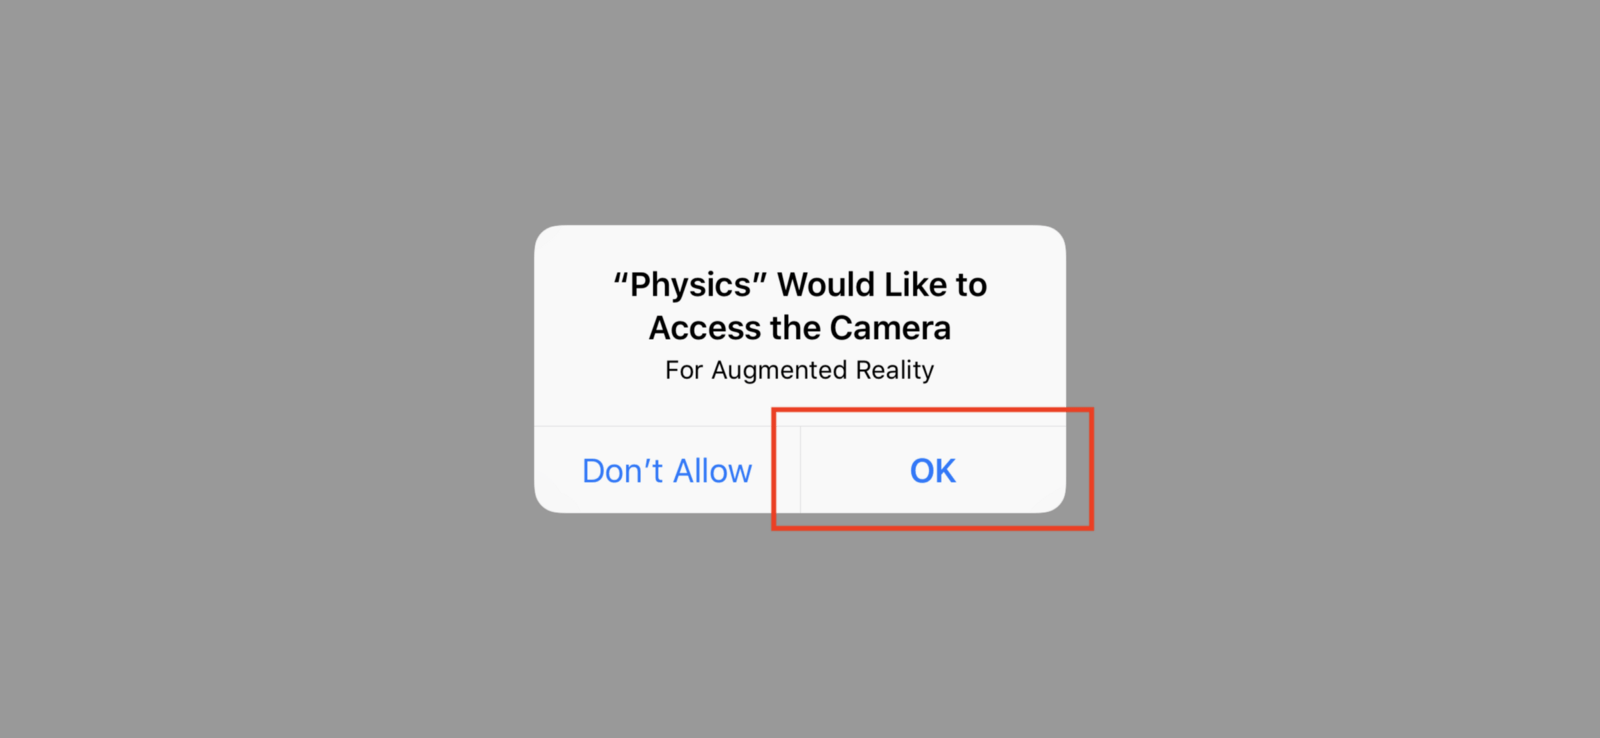 physics-camera-access